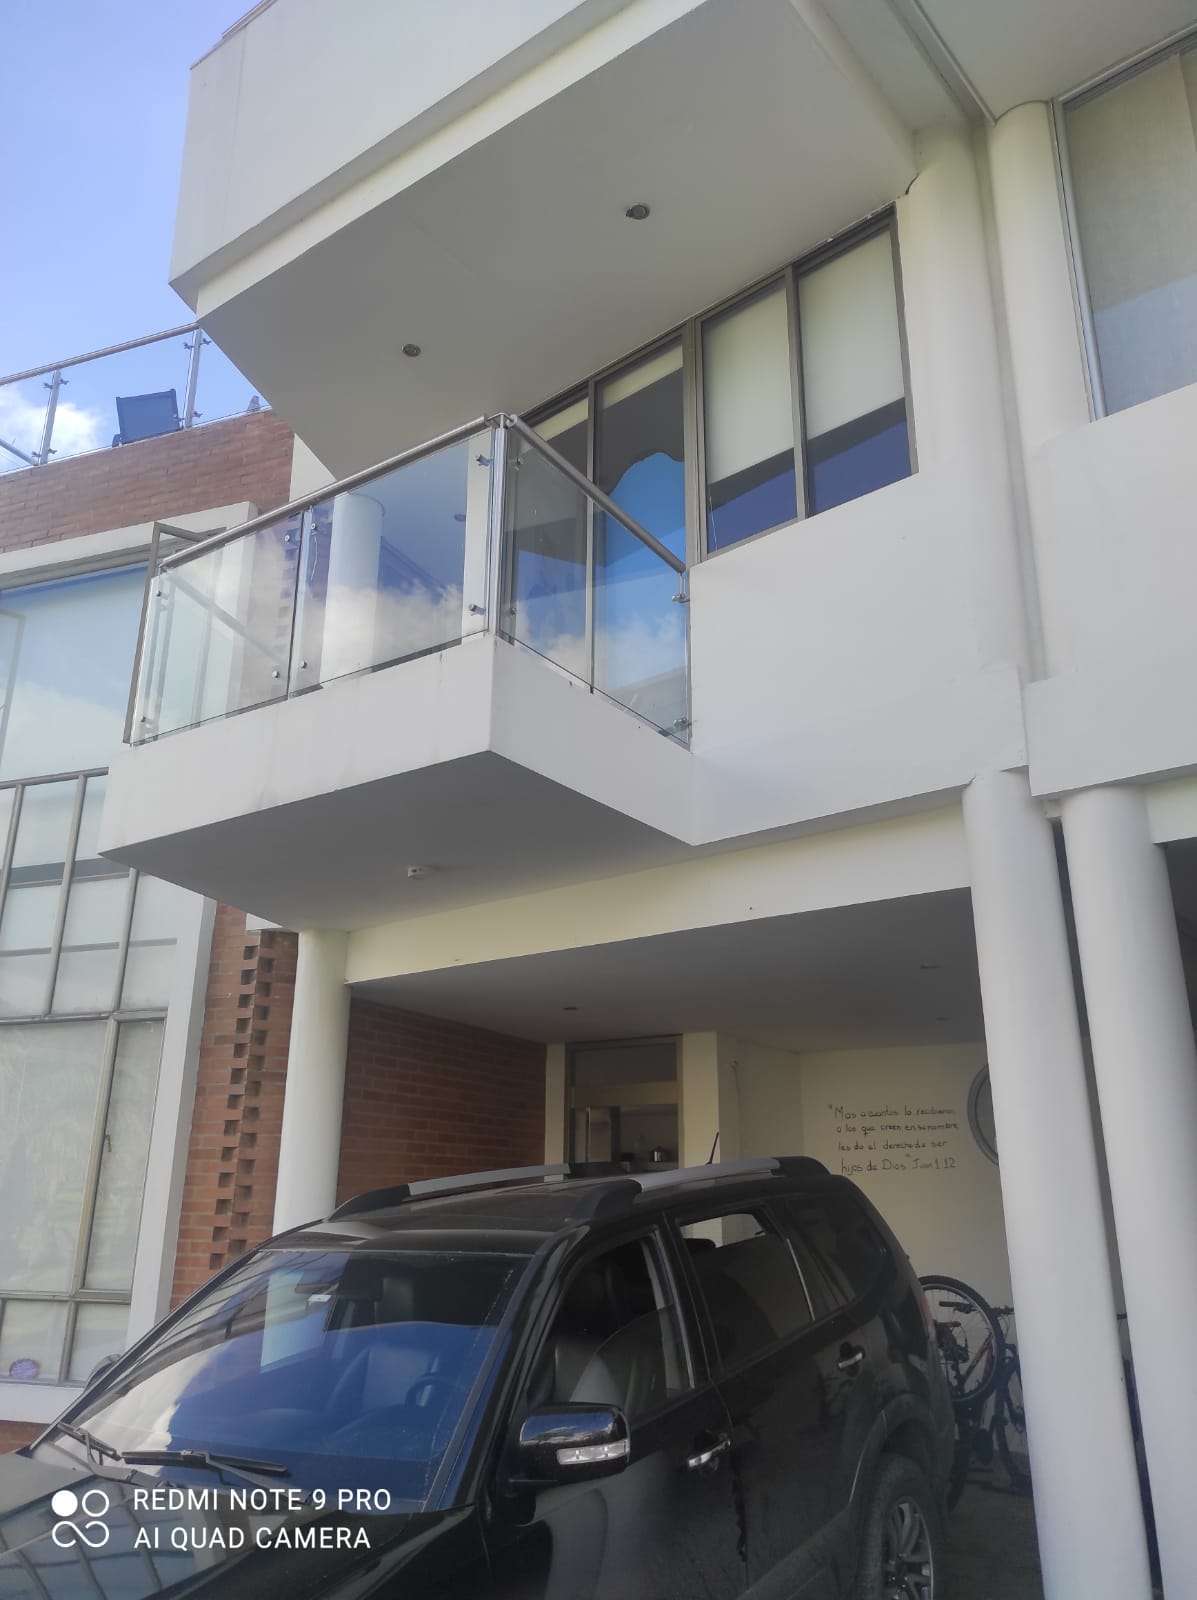 Vendo Casa de 360 M2 en Pacho Cundinamarca